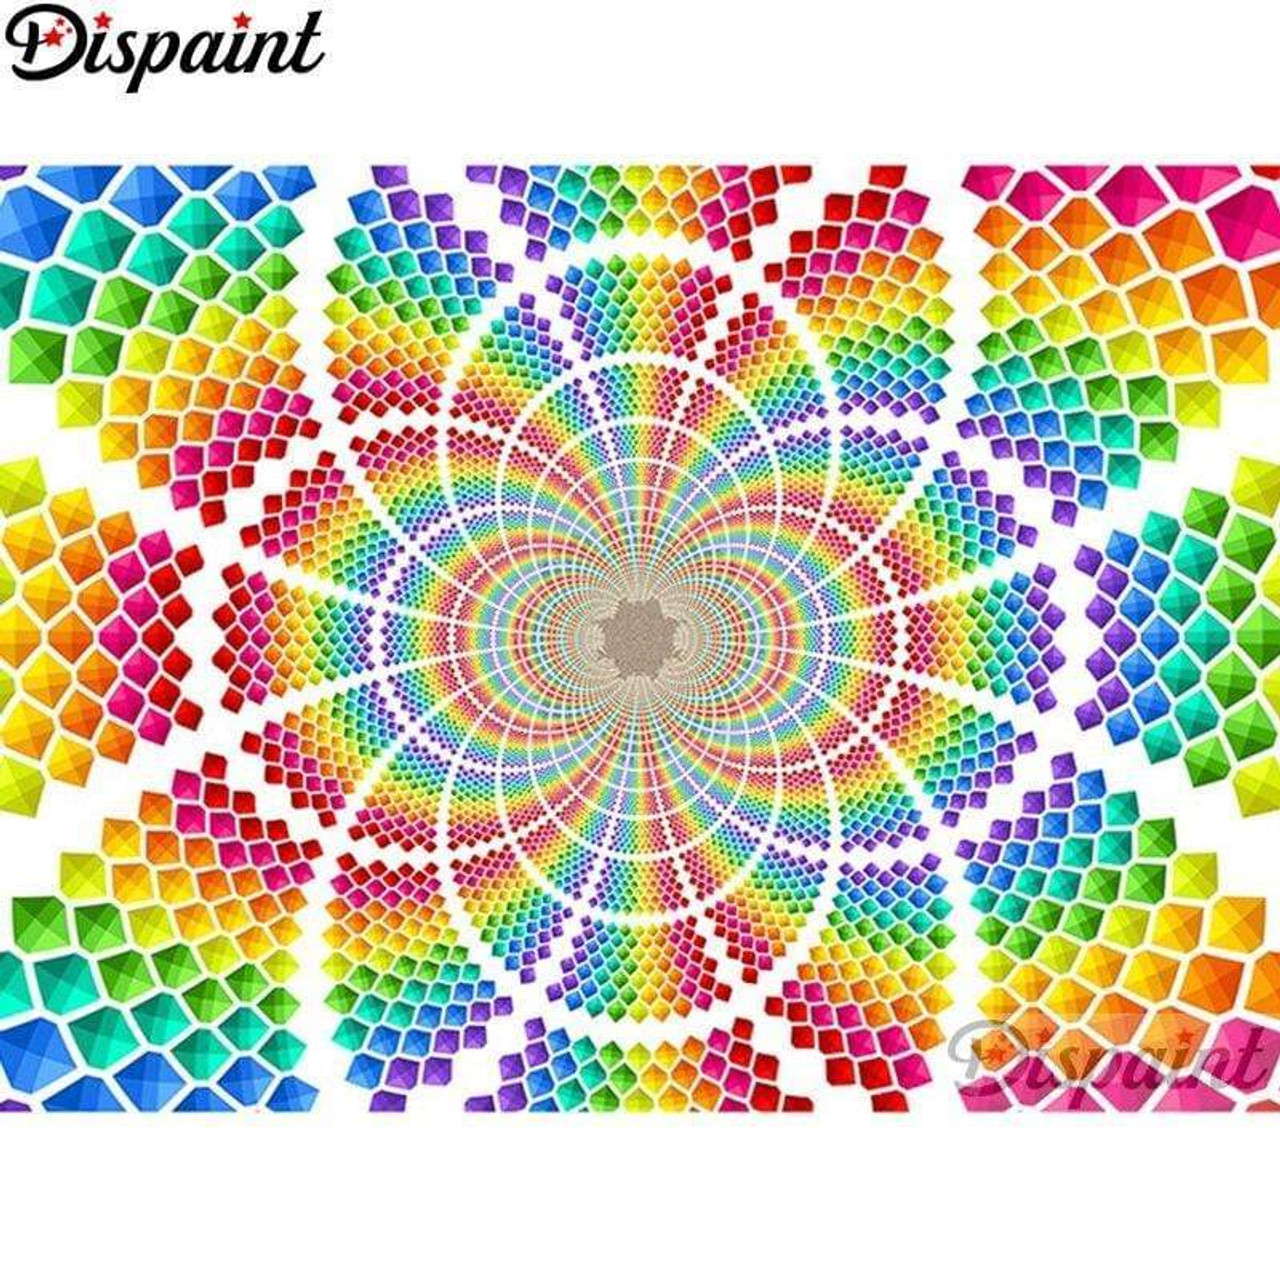 5D Diamond Painting Rainbow Heart Mandala Kit